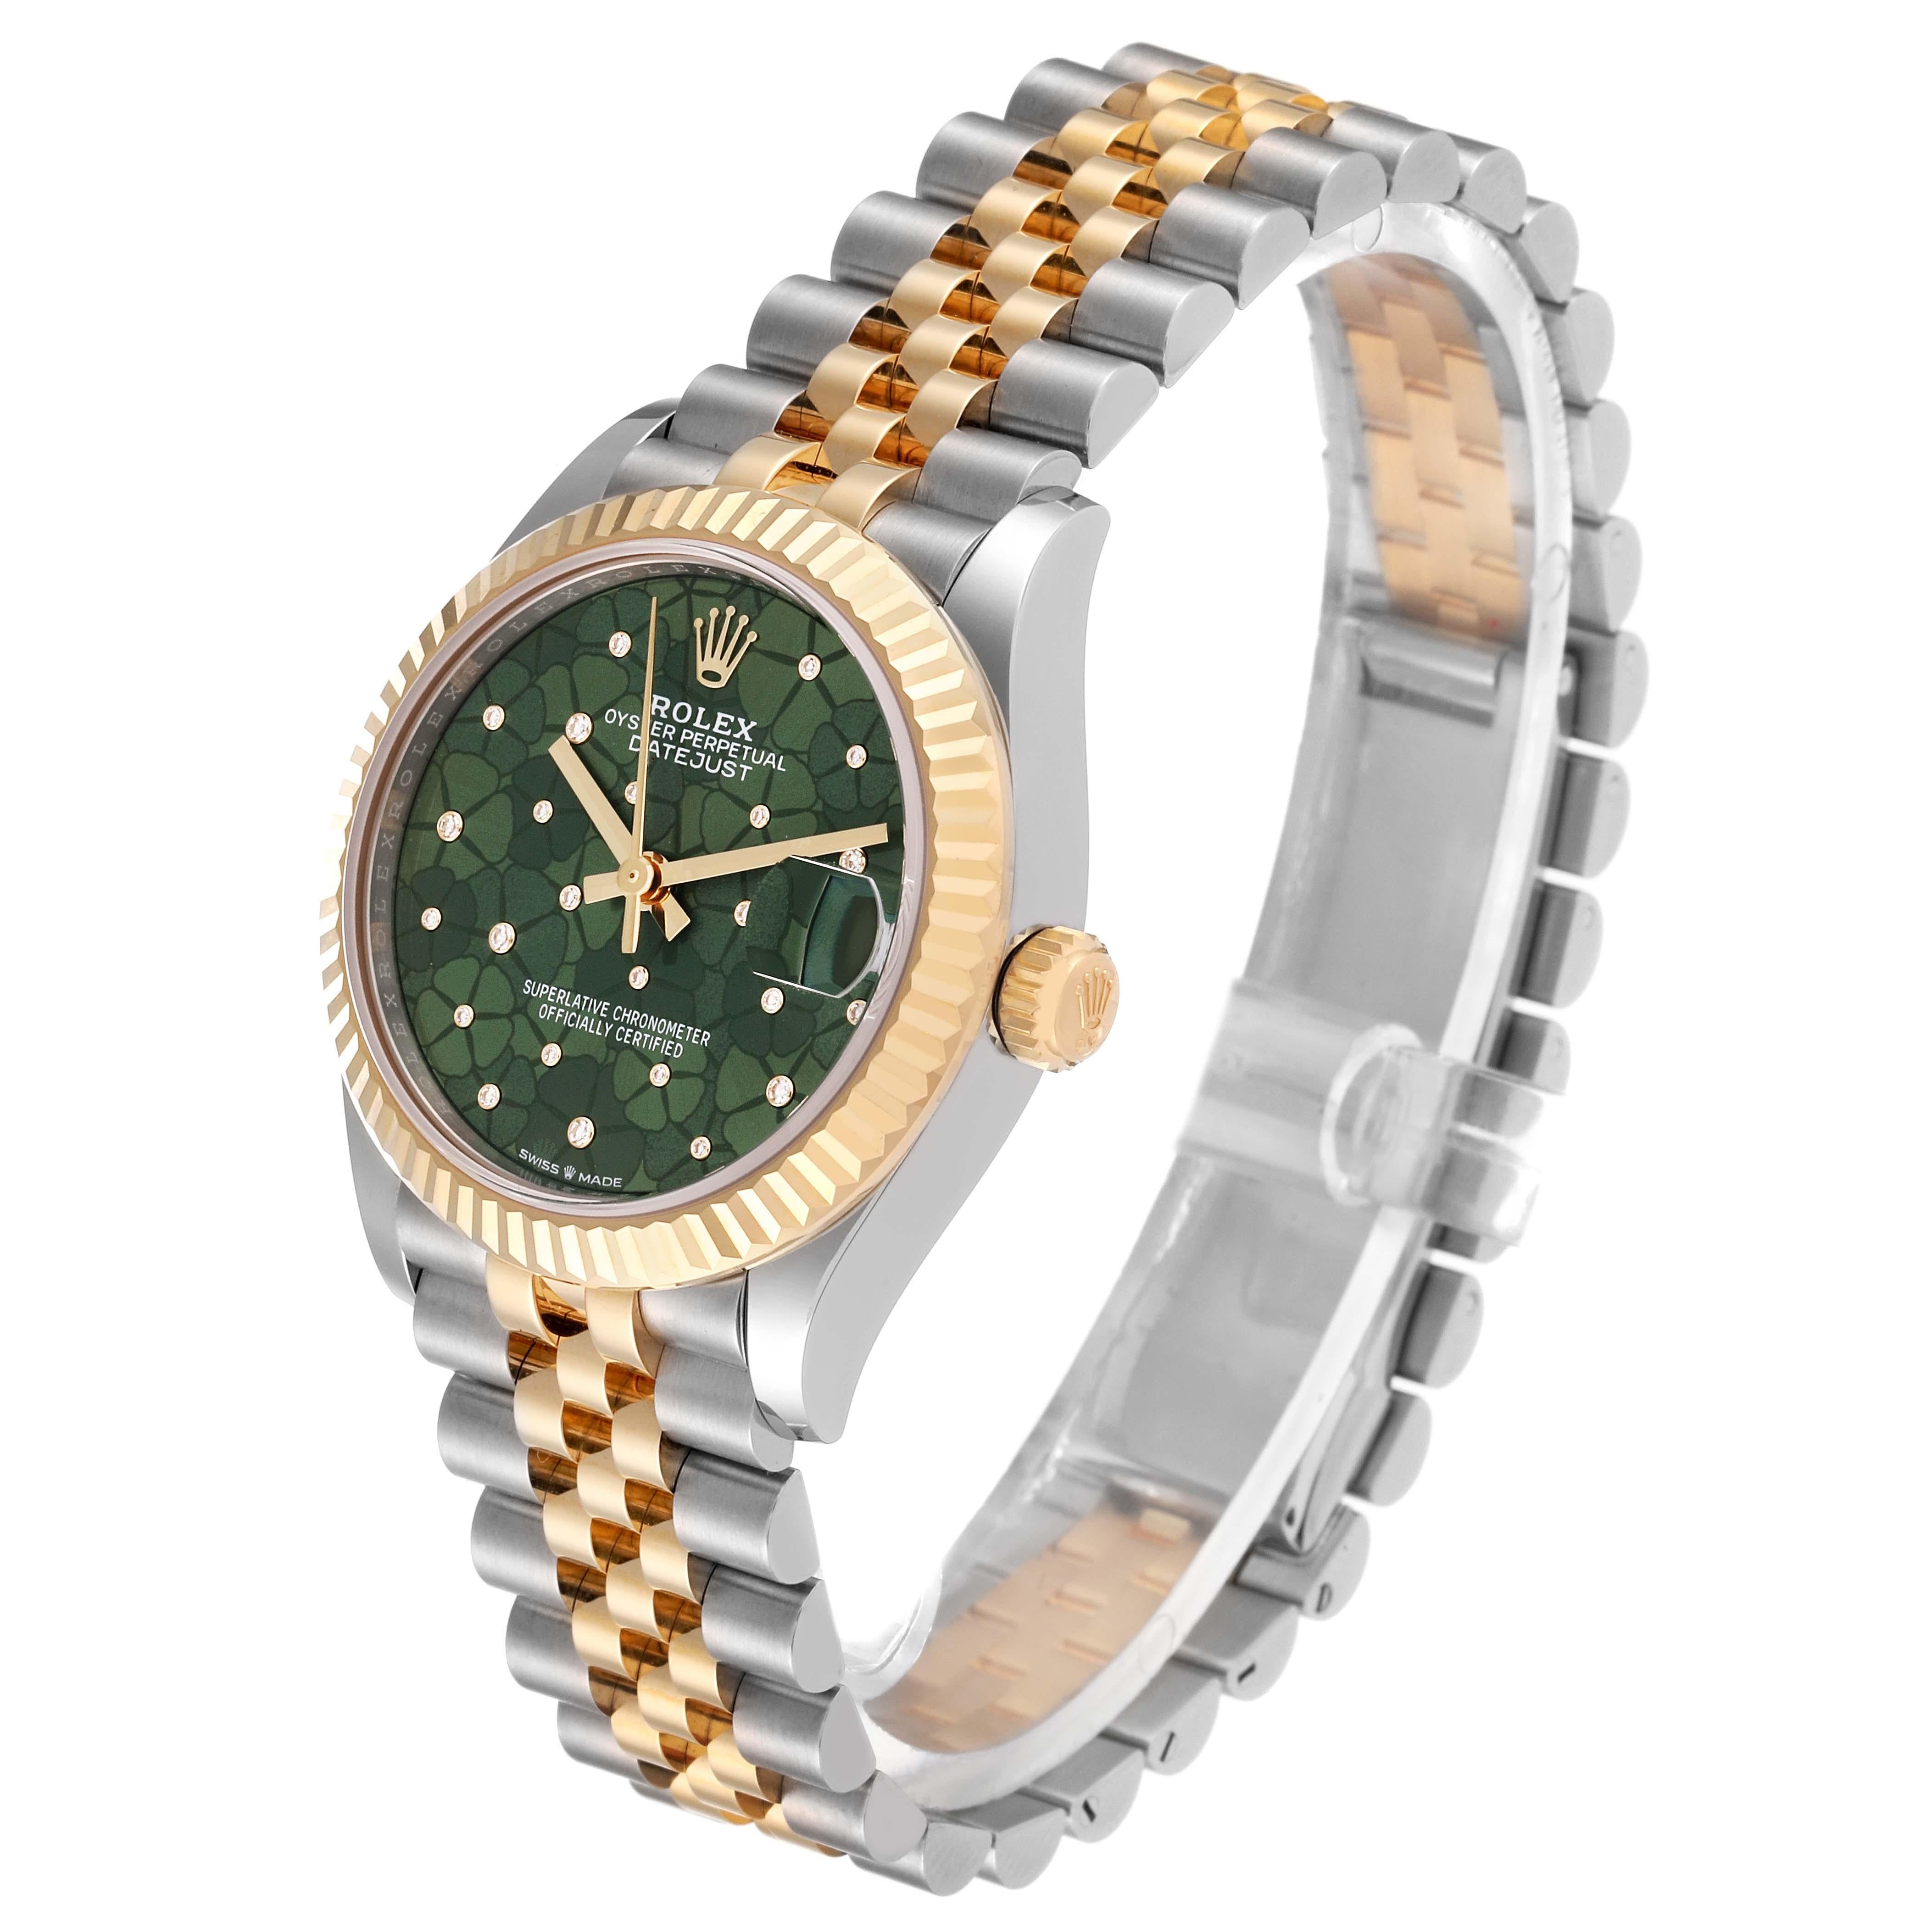 Women's Rolex Datejust Midsize Steel Yellow Gold Diamond Dial Ladies Watch 278273 Unworn